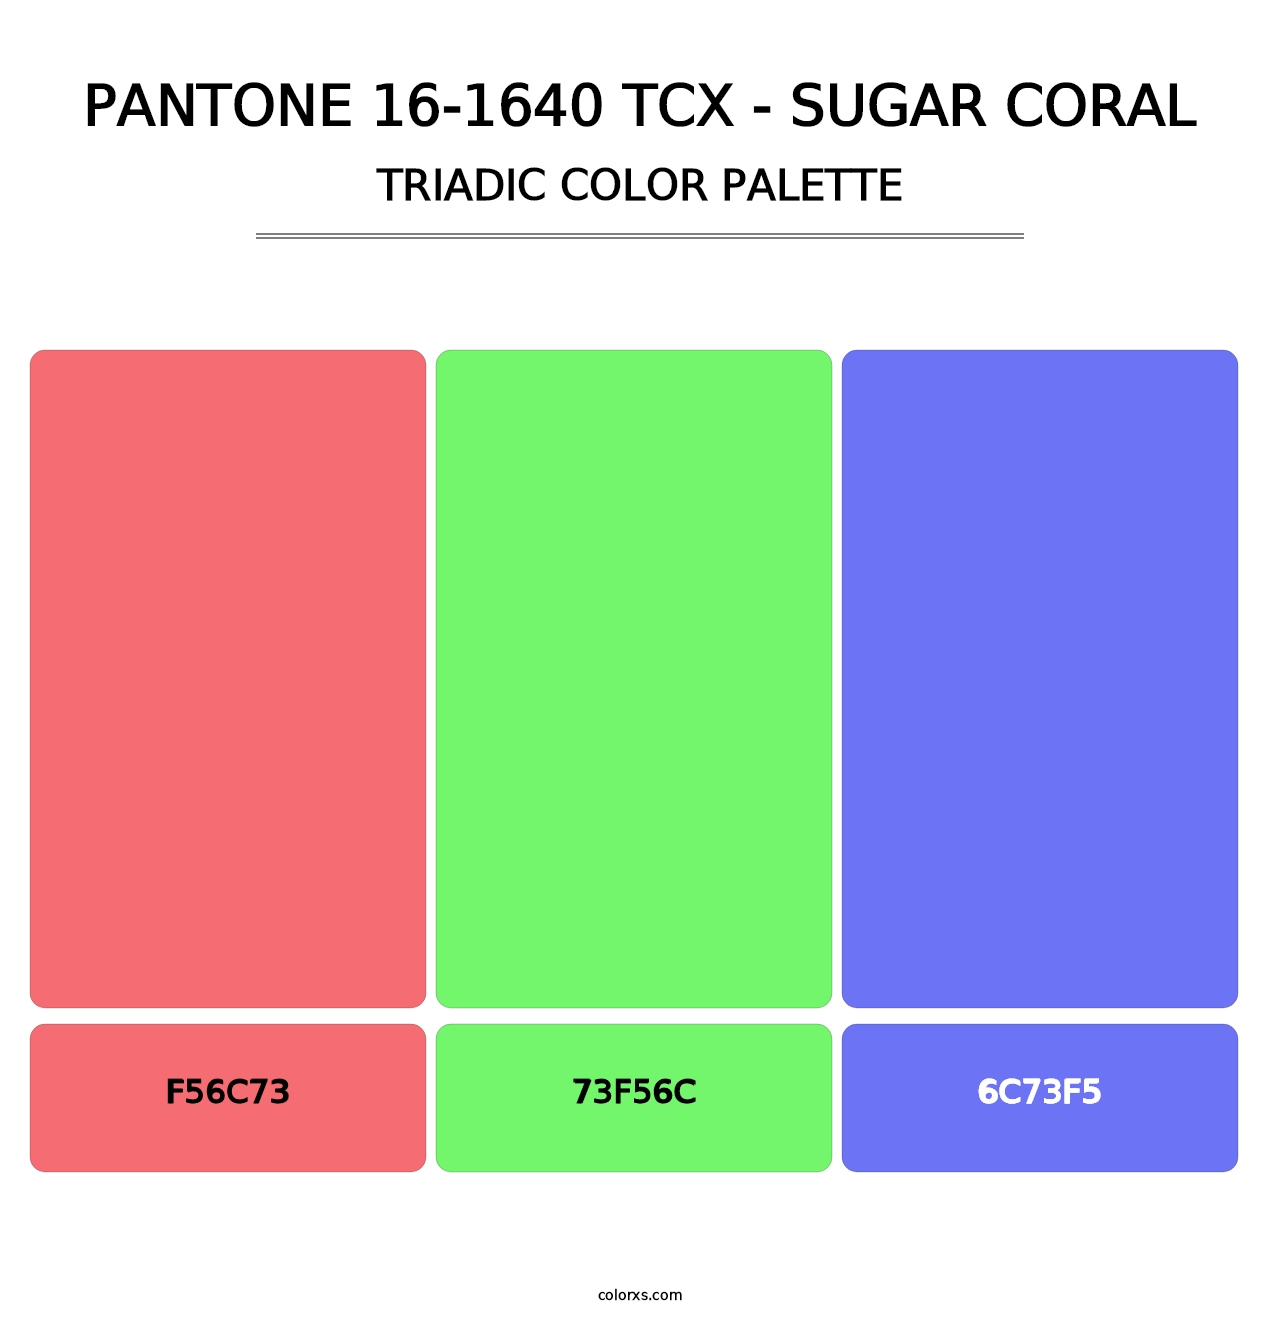 PANTONE 16-1640 TCX - Sugar Coral - Triadic Color Palette